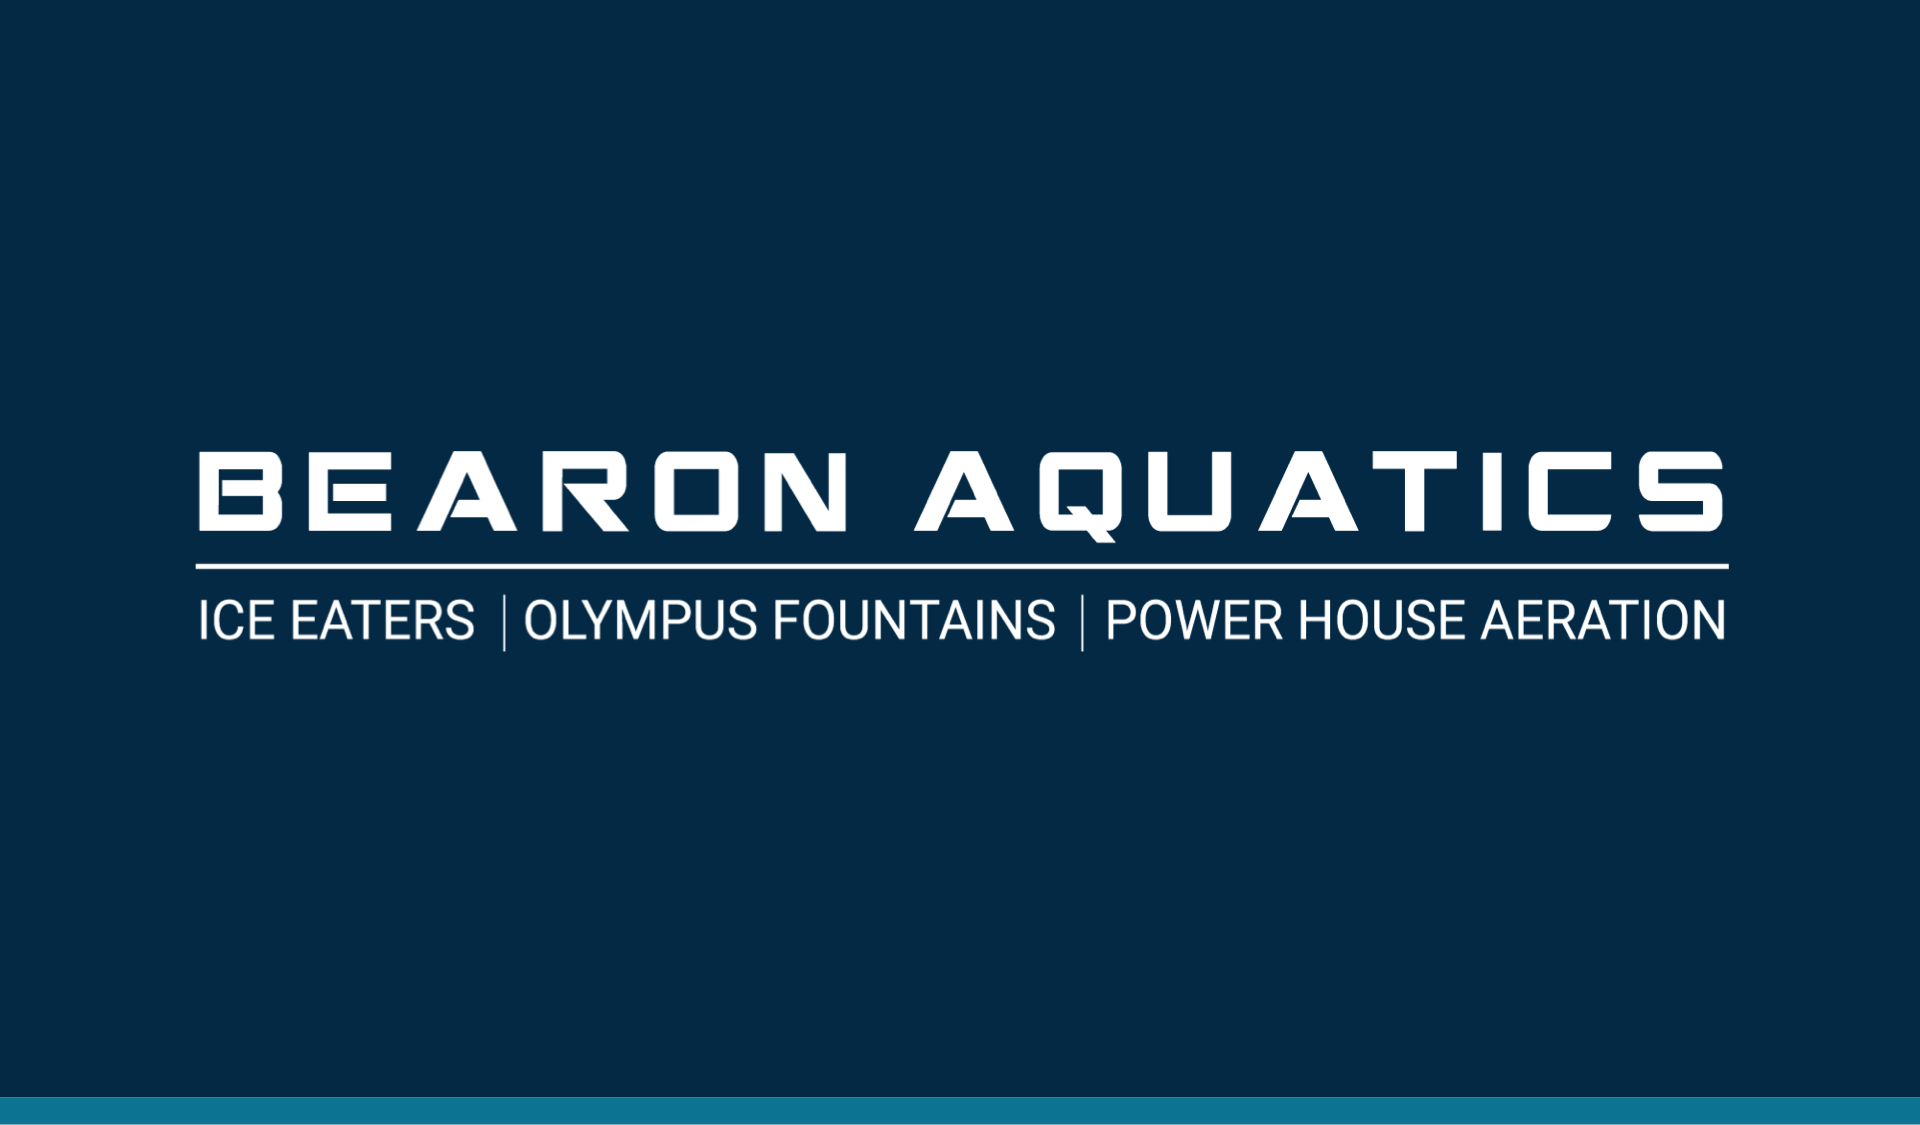 Bearon Aquatics fountains, aerators, ice eaters